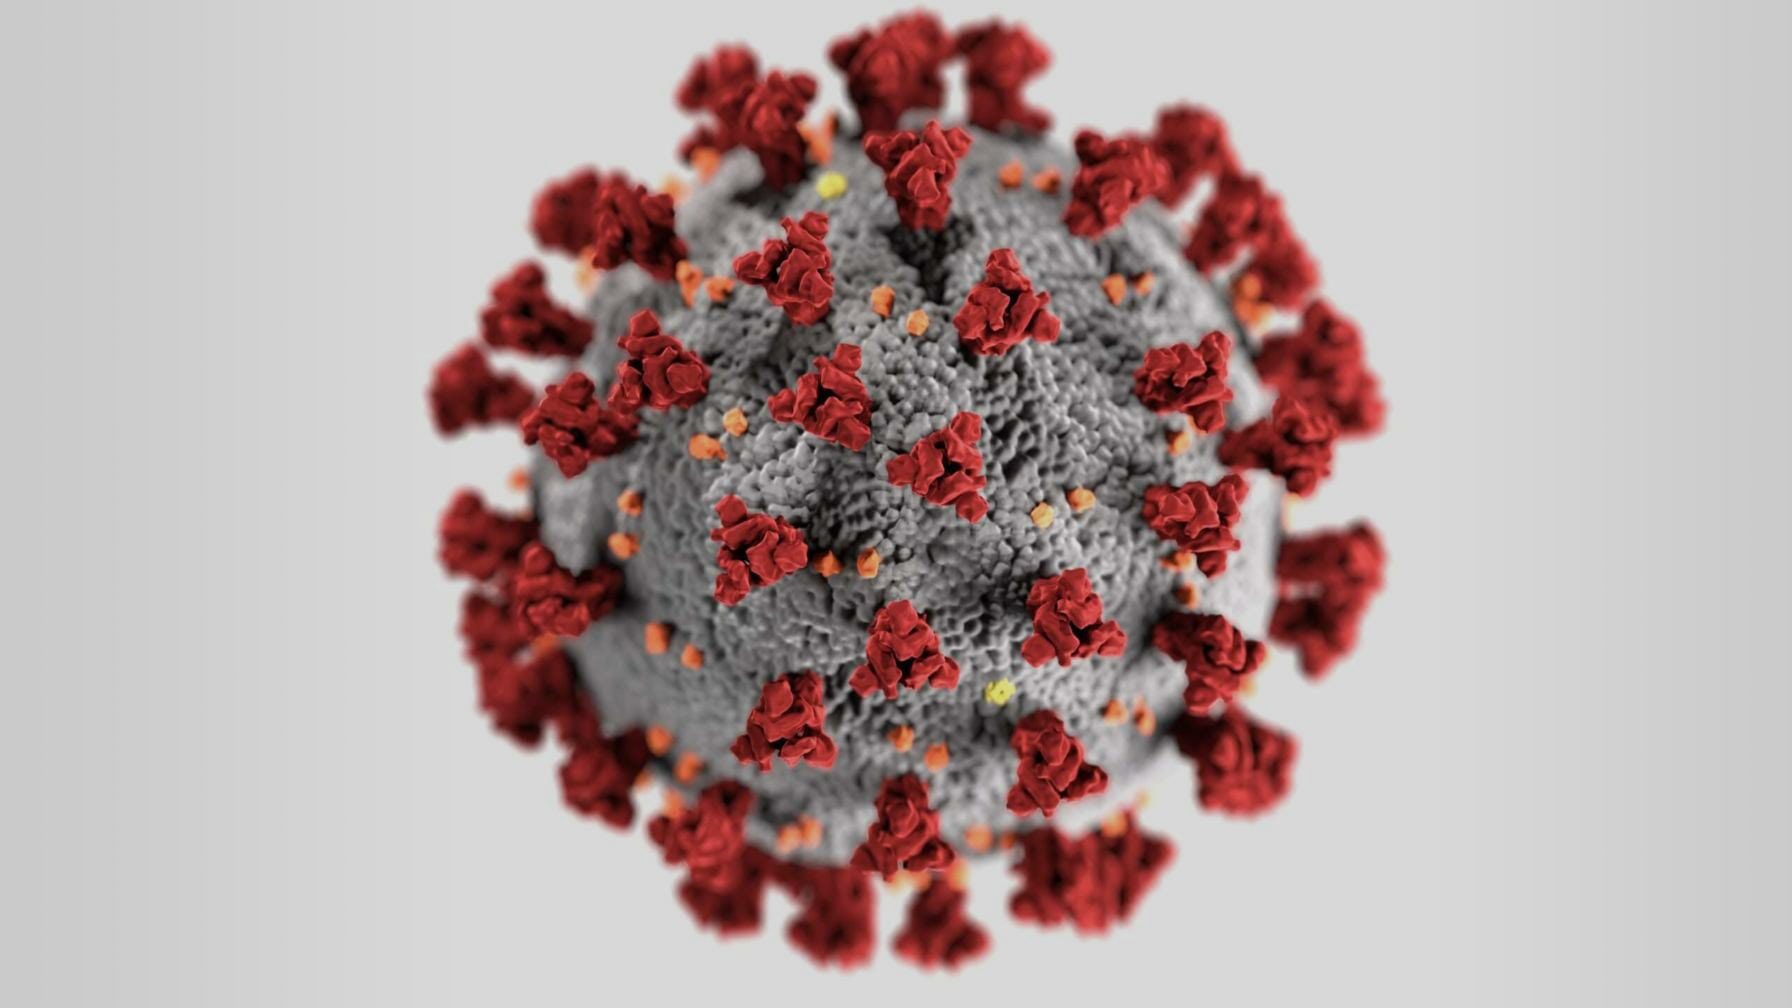 Close-up of microscopic rendition of Coronavirus